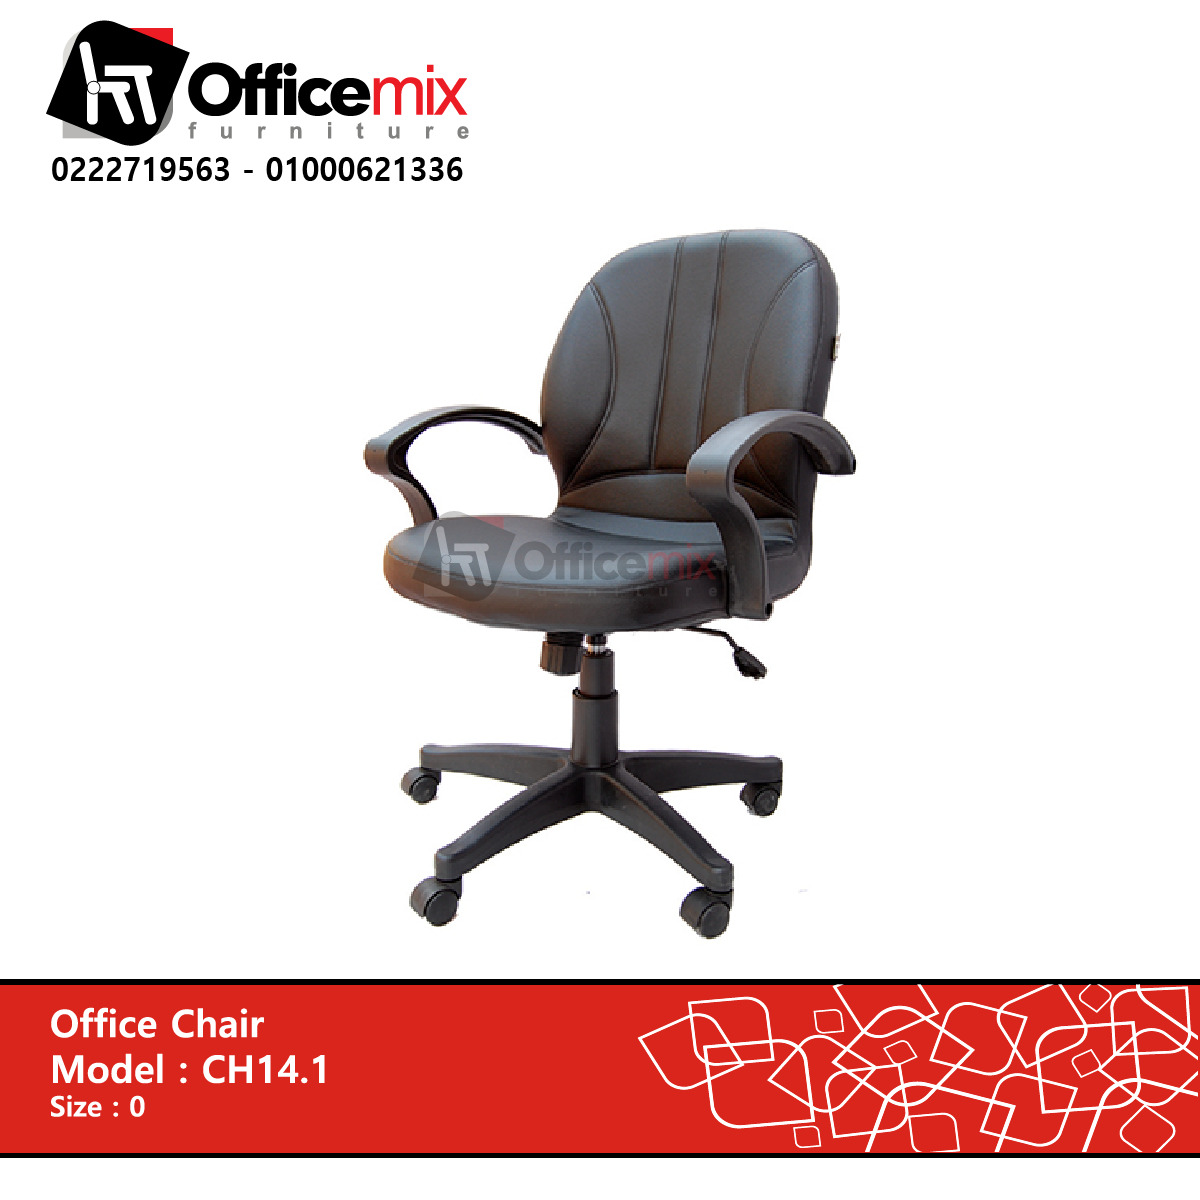 office mix Staff chair ch14